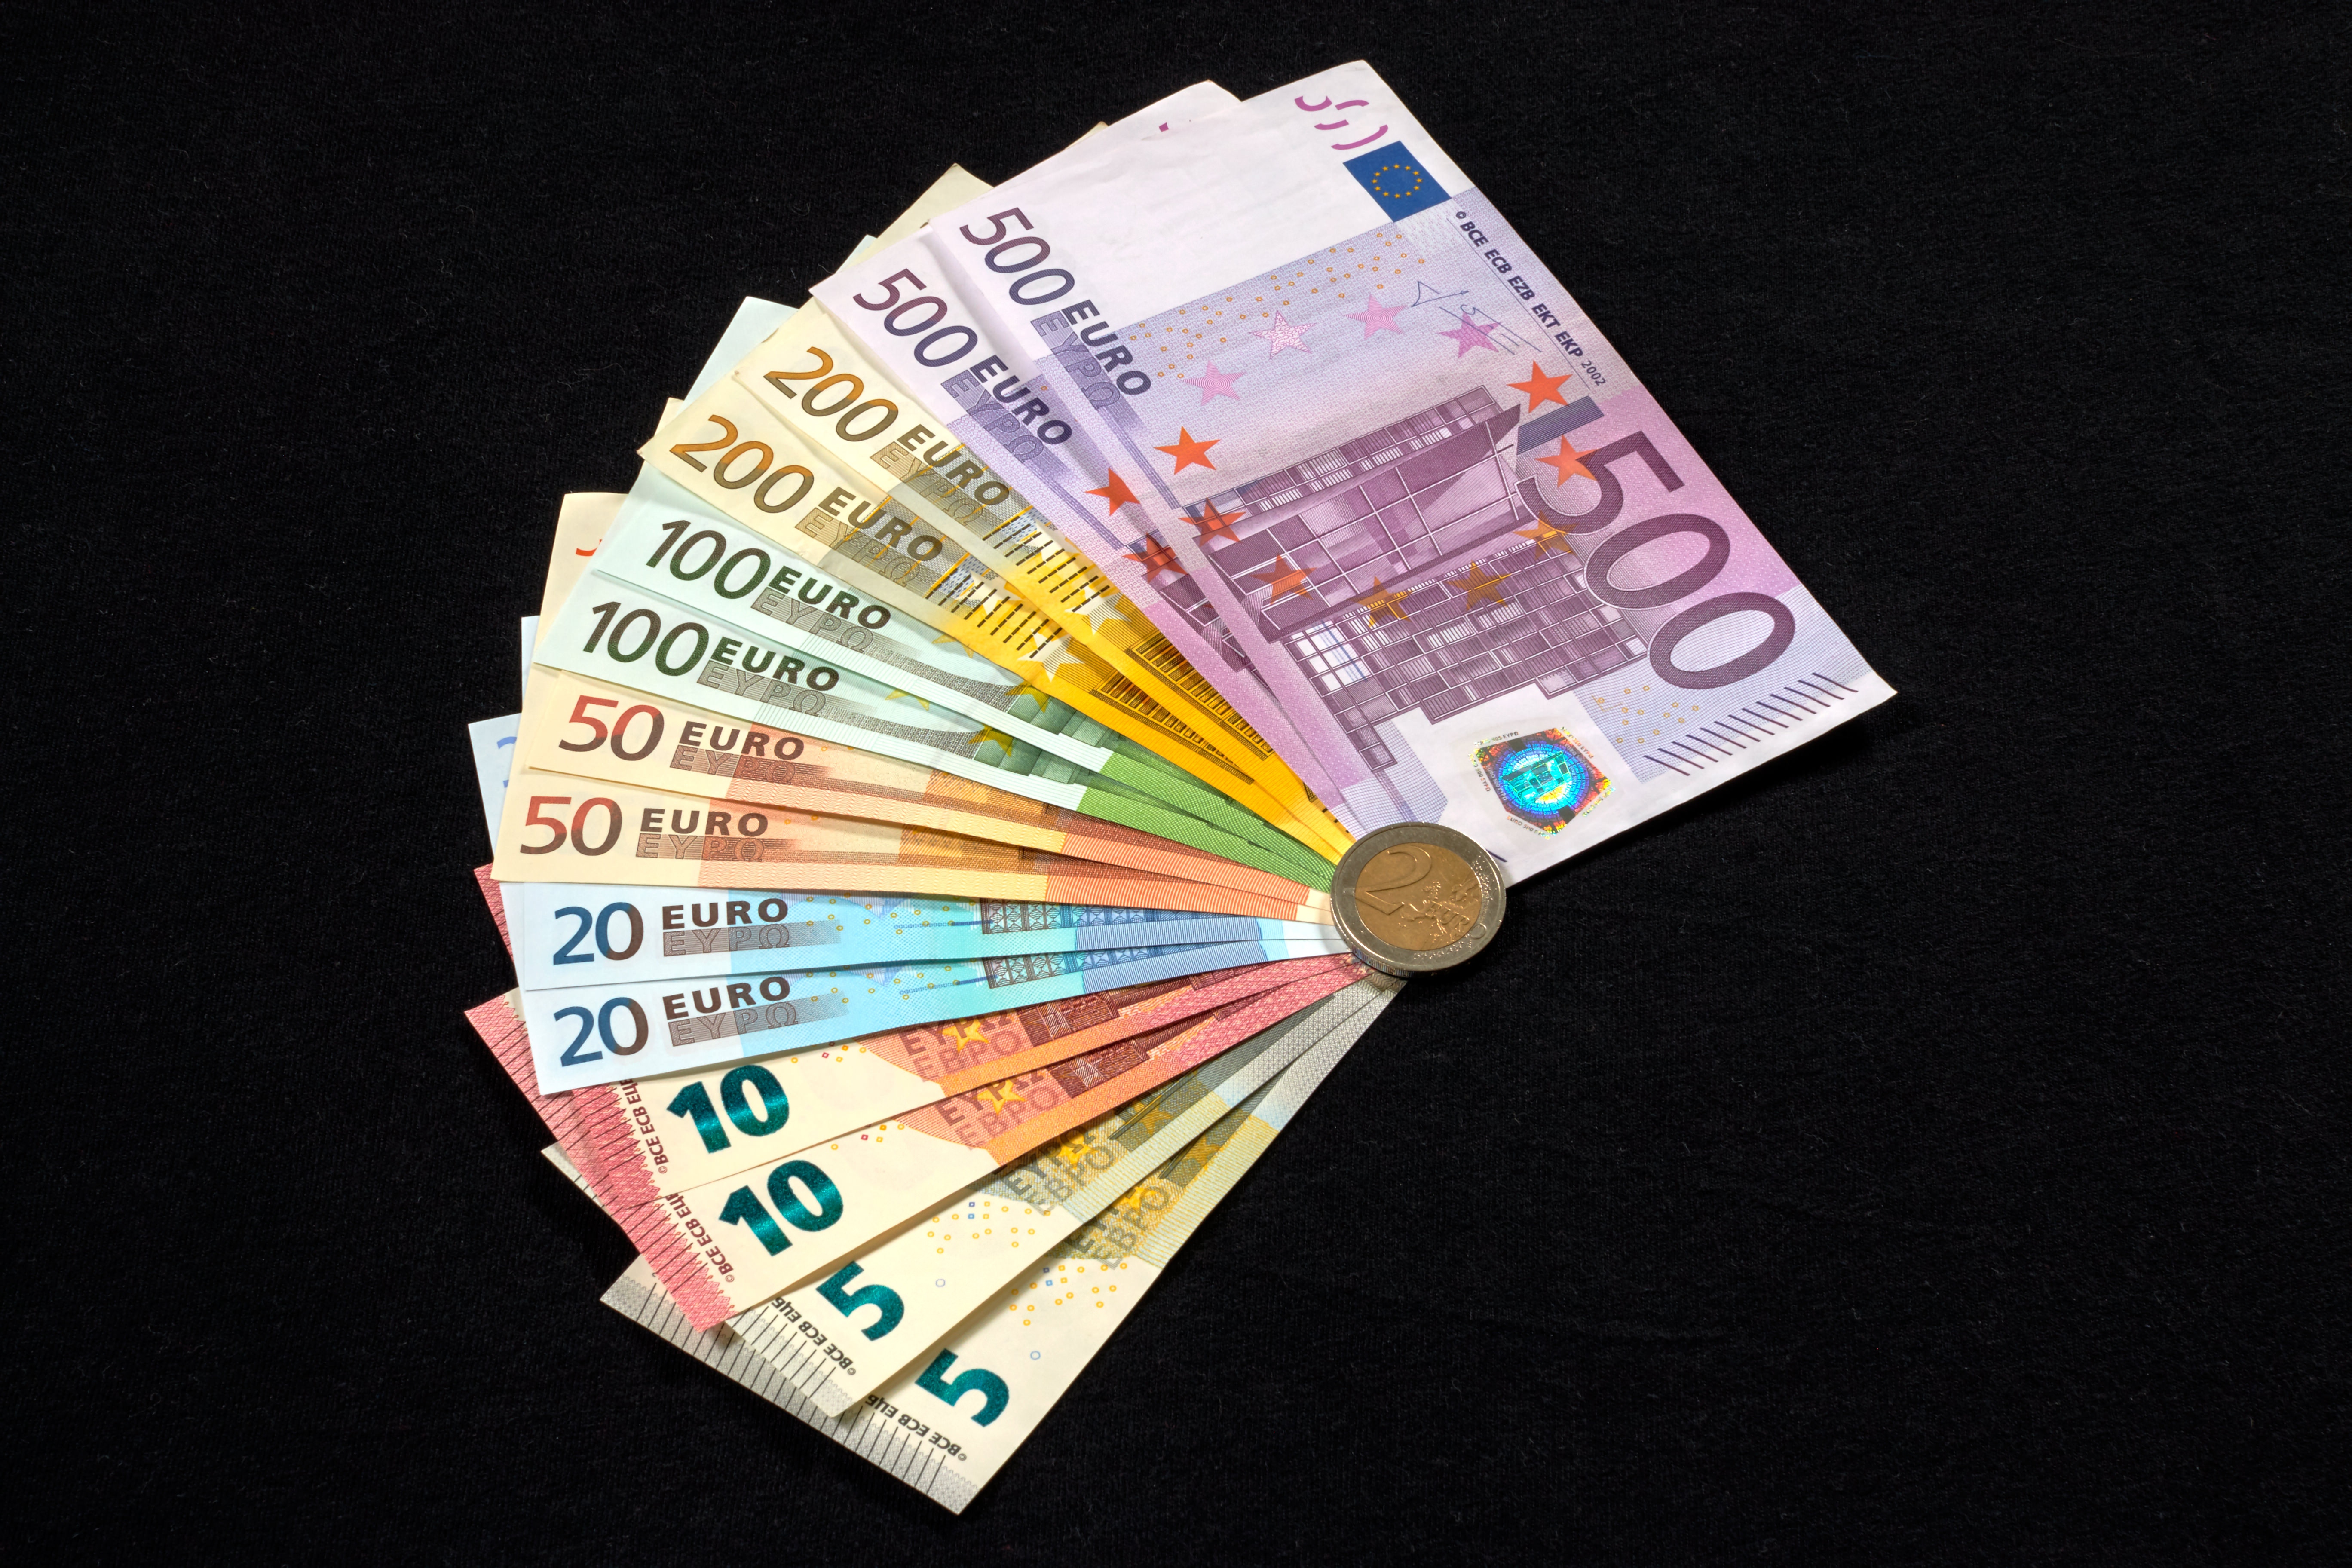 Euro currency. Евро валюта. Евро фото. Деньги евро. Евро фото купюр.